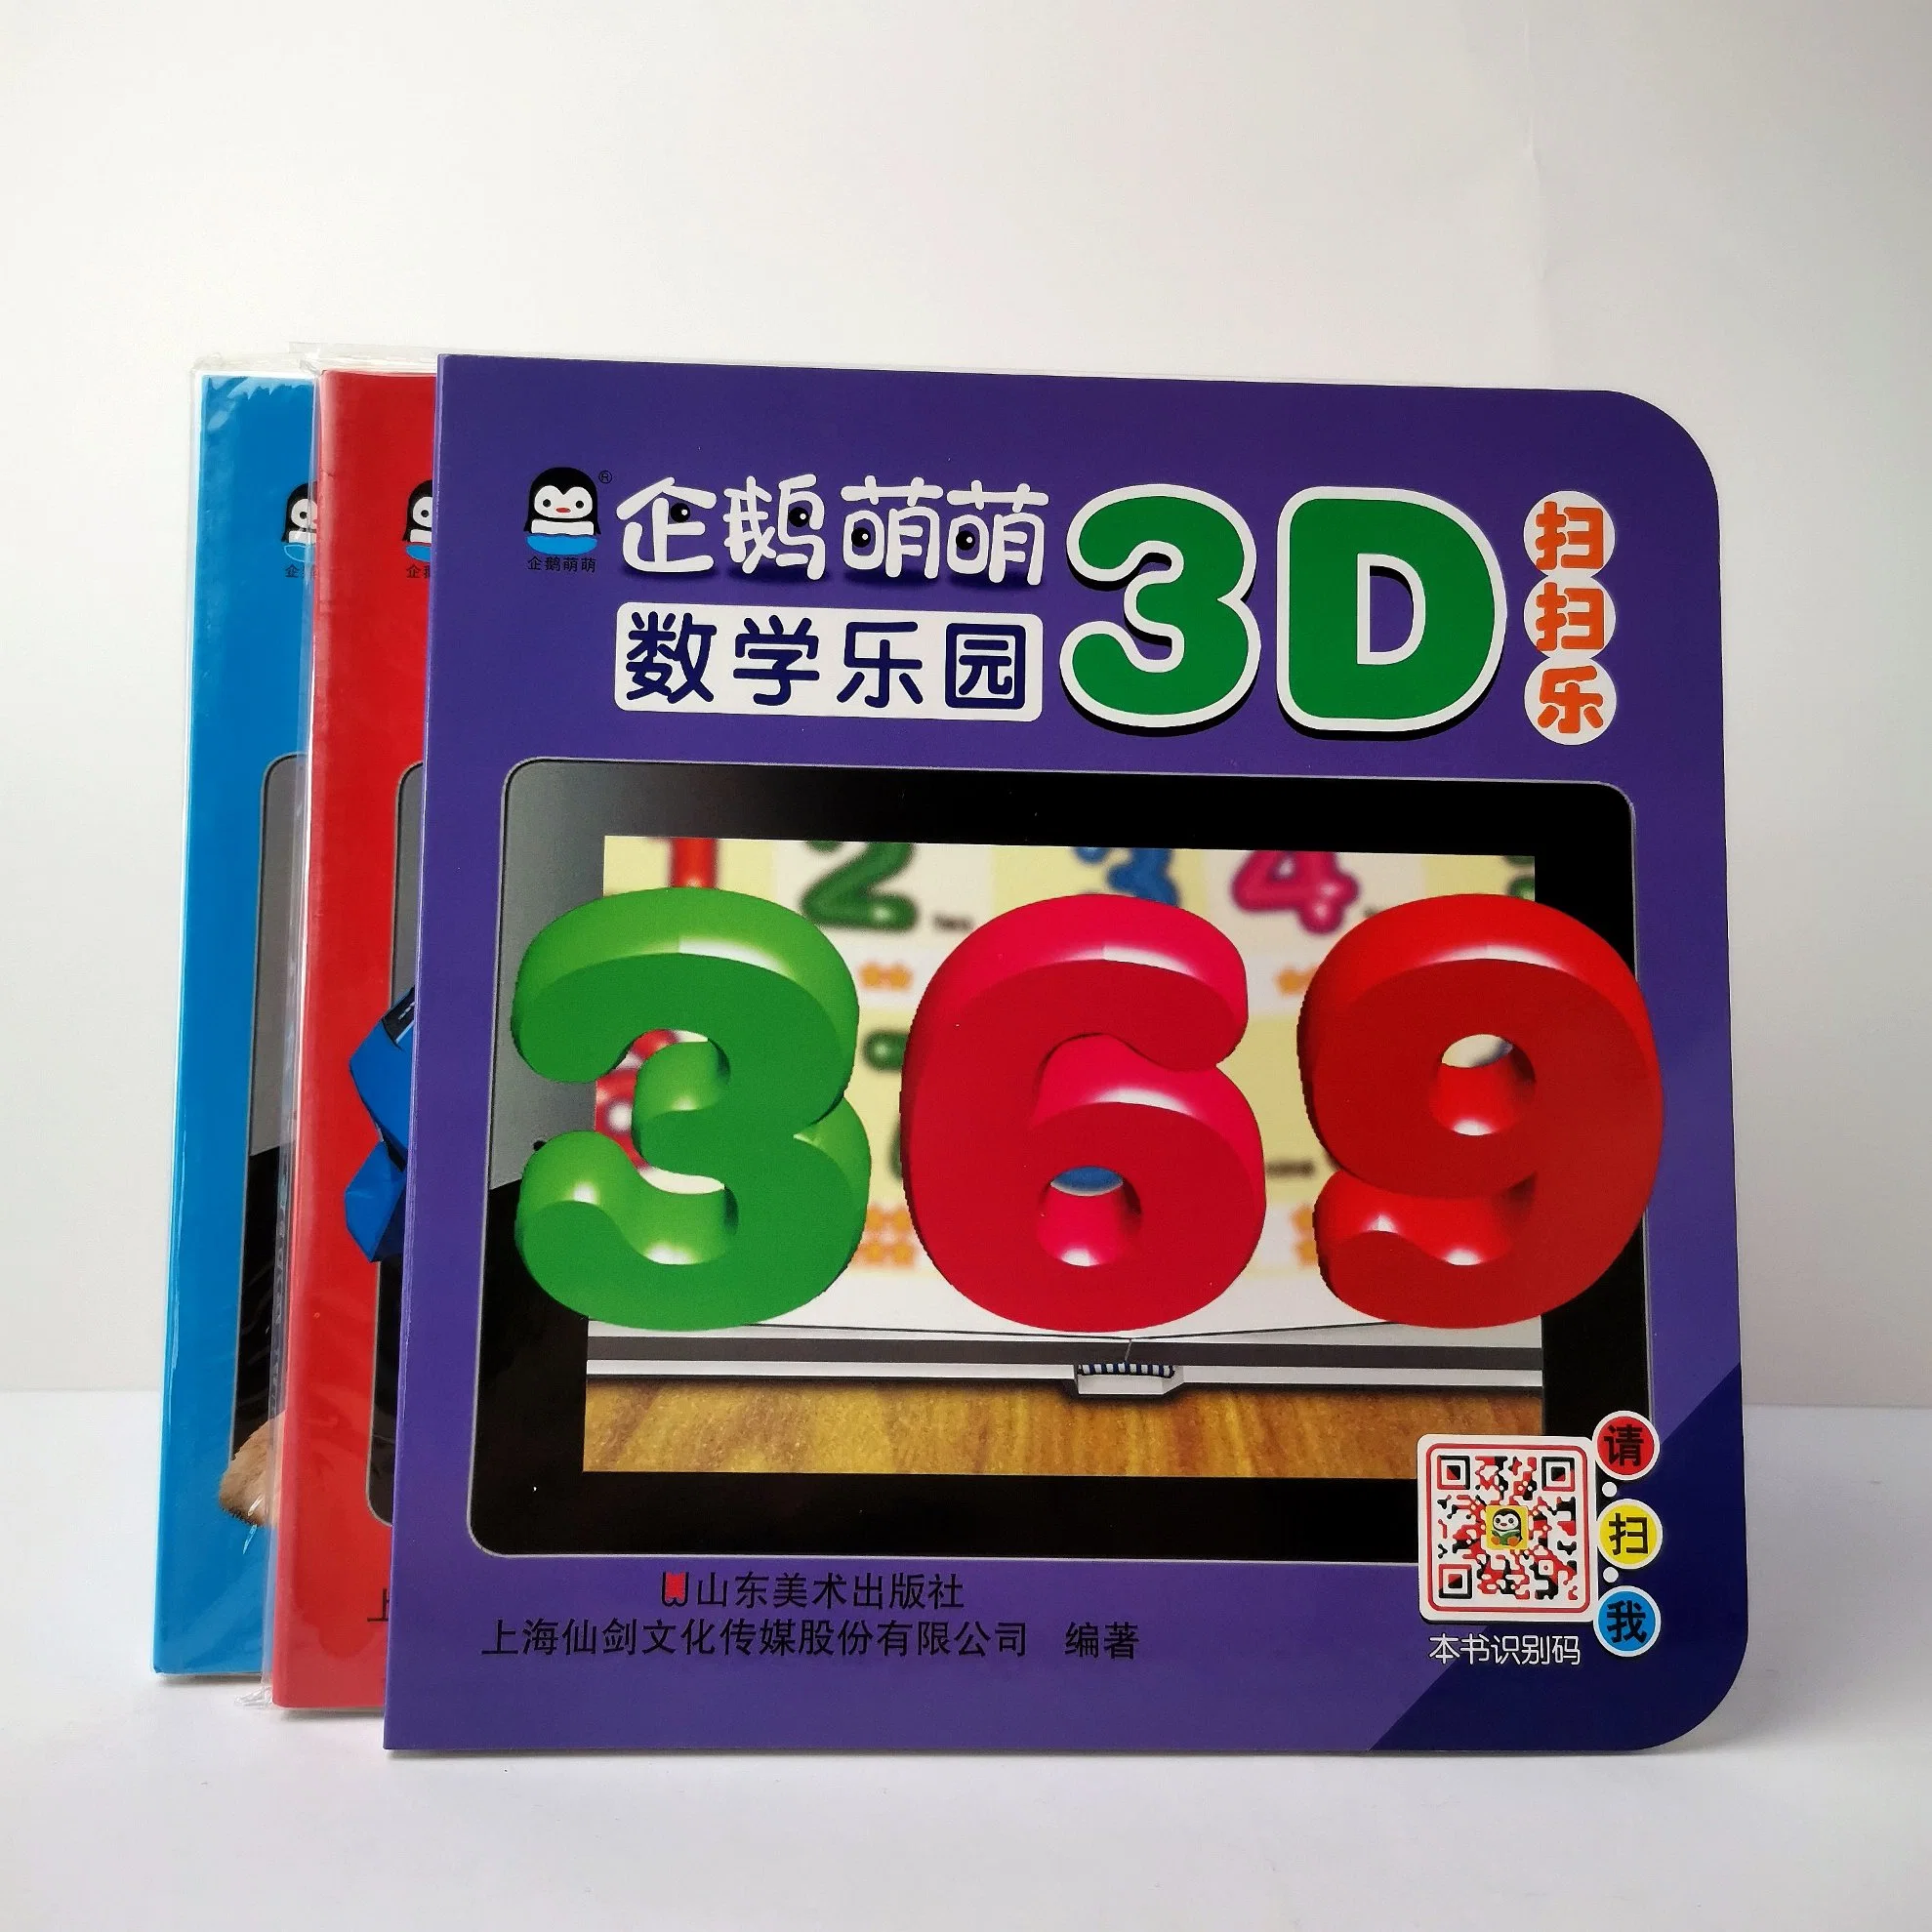 Children Can Not Tear The 3D Flash Card